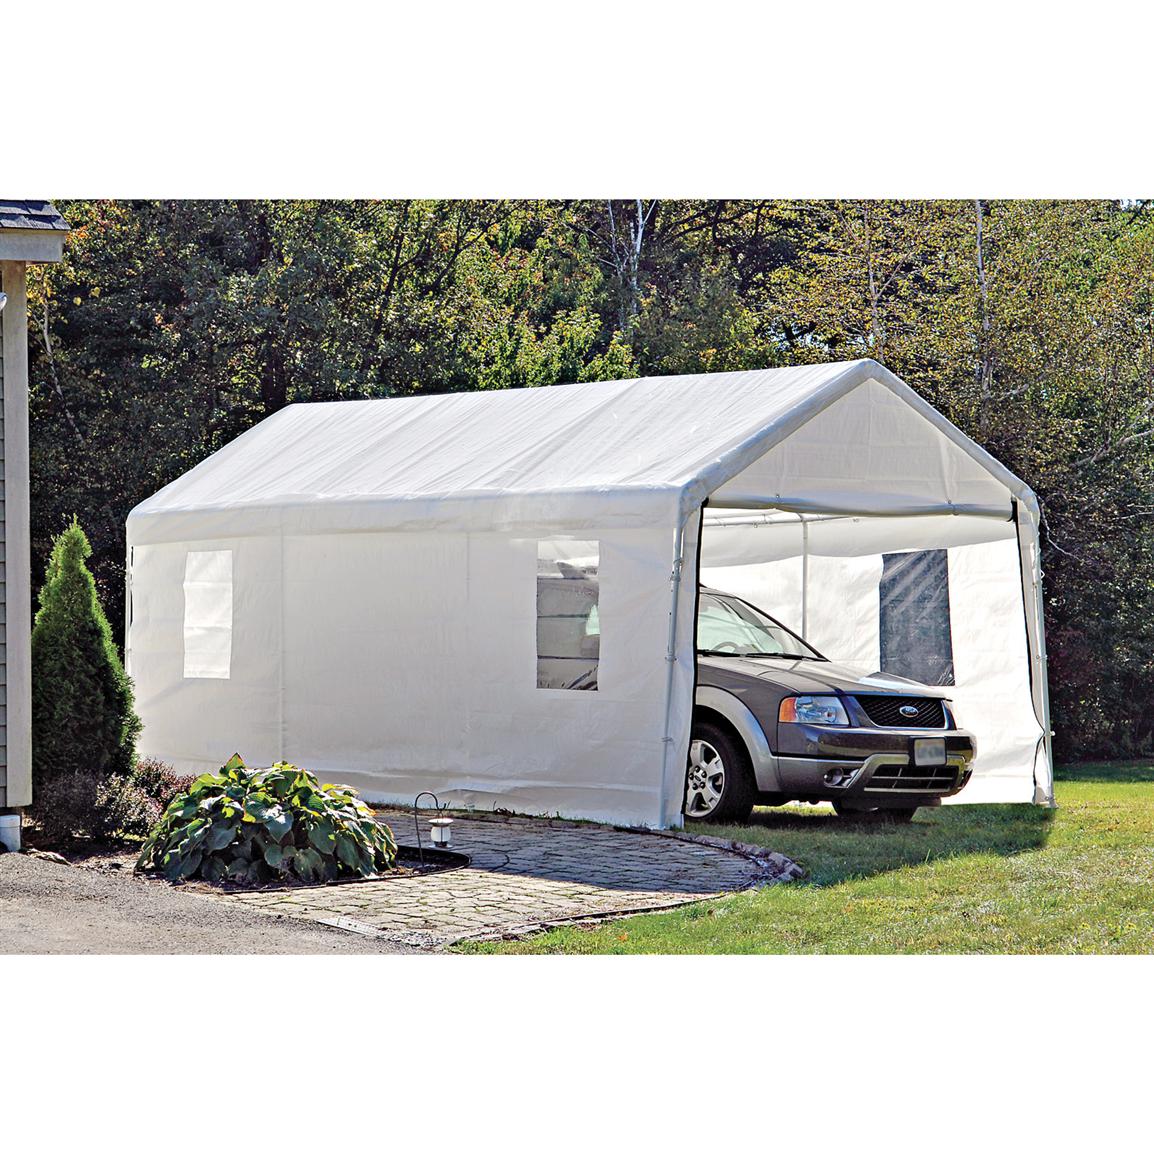 Shelterlogic Portable Garage Canopy Carport 10 X 20 117083 Garage Car Shelters At Sportsman S Guide